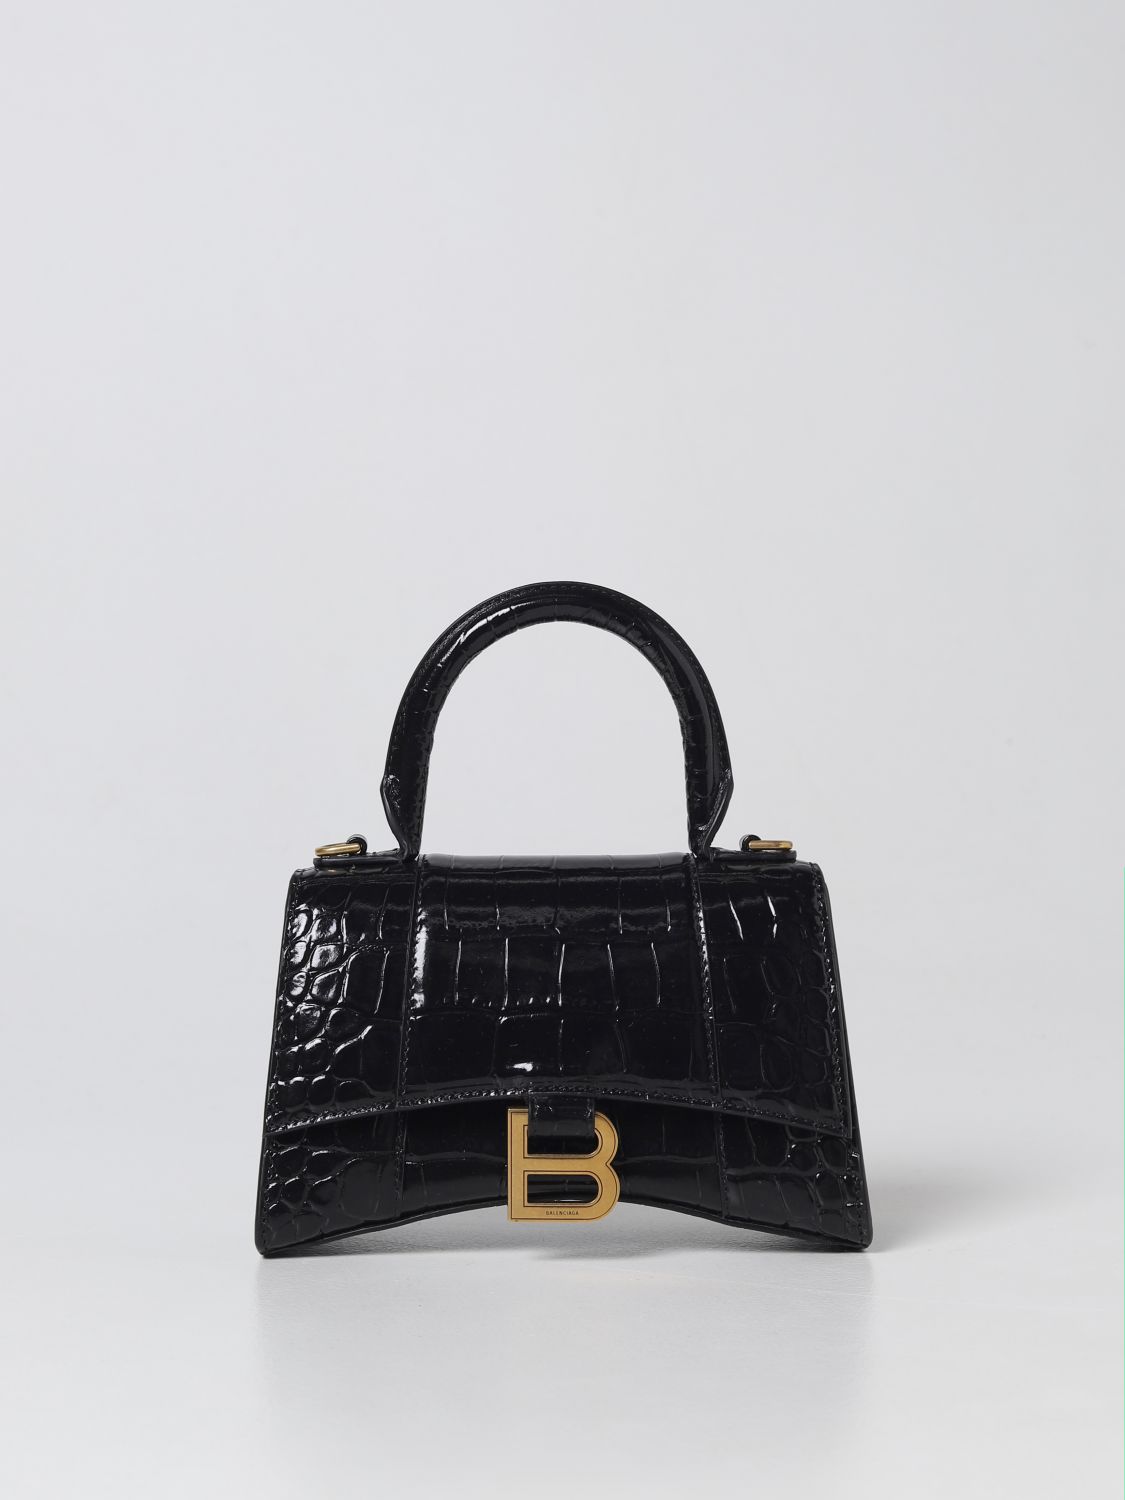 BALENCIAGA: Hourglass bag in crocodile print leather Black | Balenciaga mini bag online on